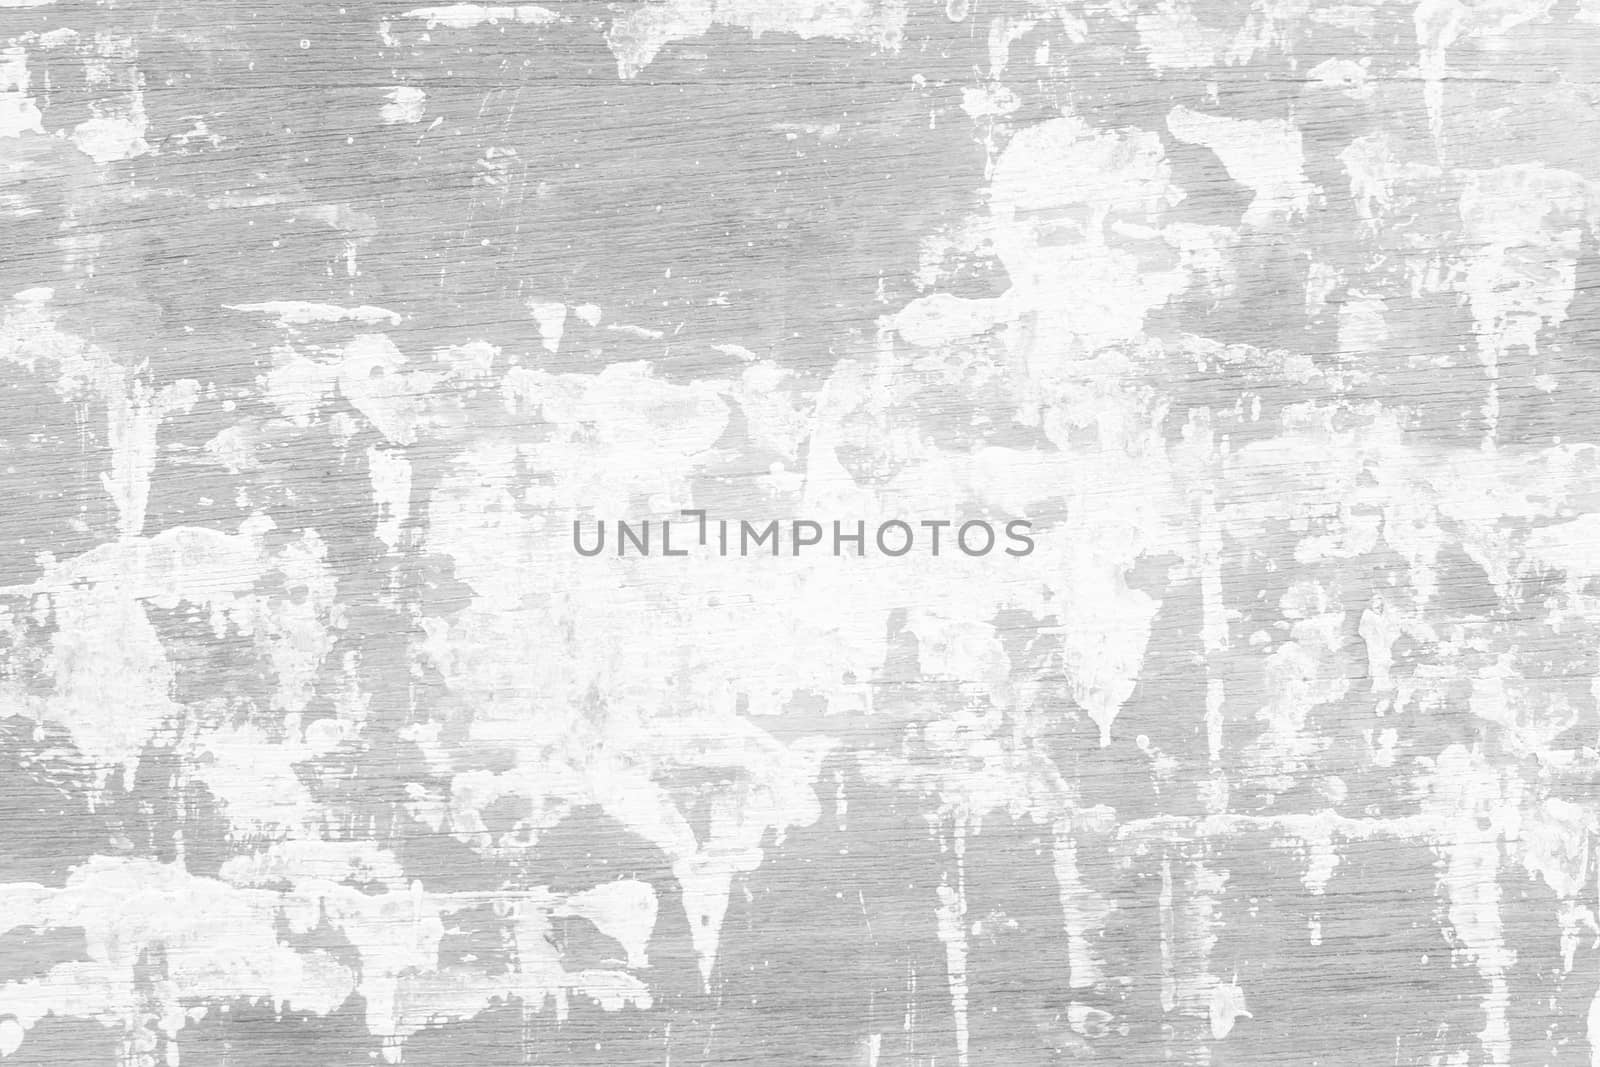 White Grunge Wood Board Texture Background.